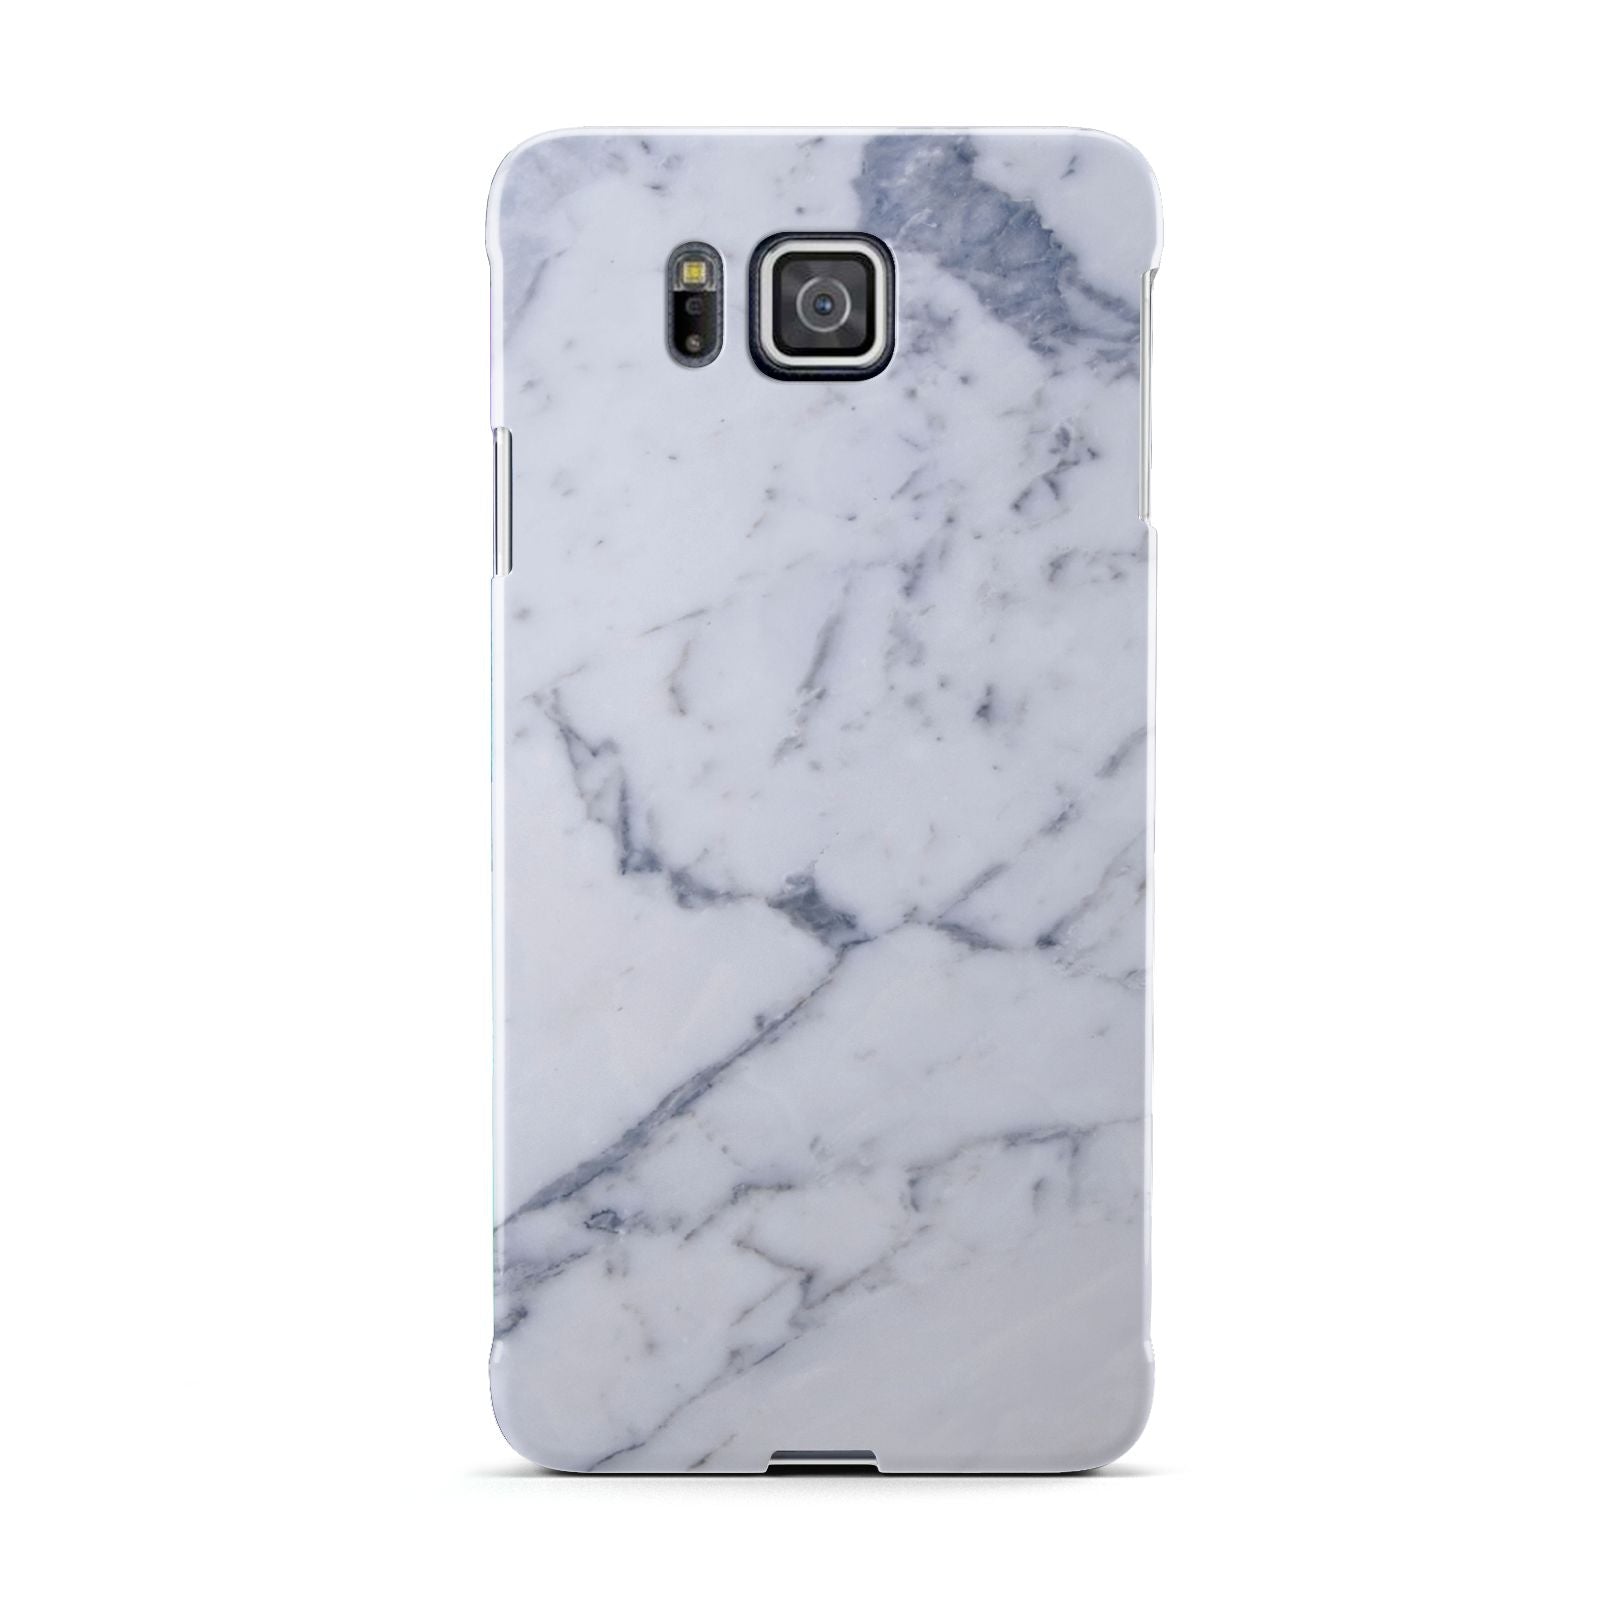 Faux Marble Grey White Samsung Galaxy Alpha Case